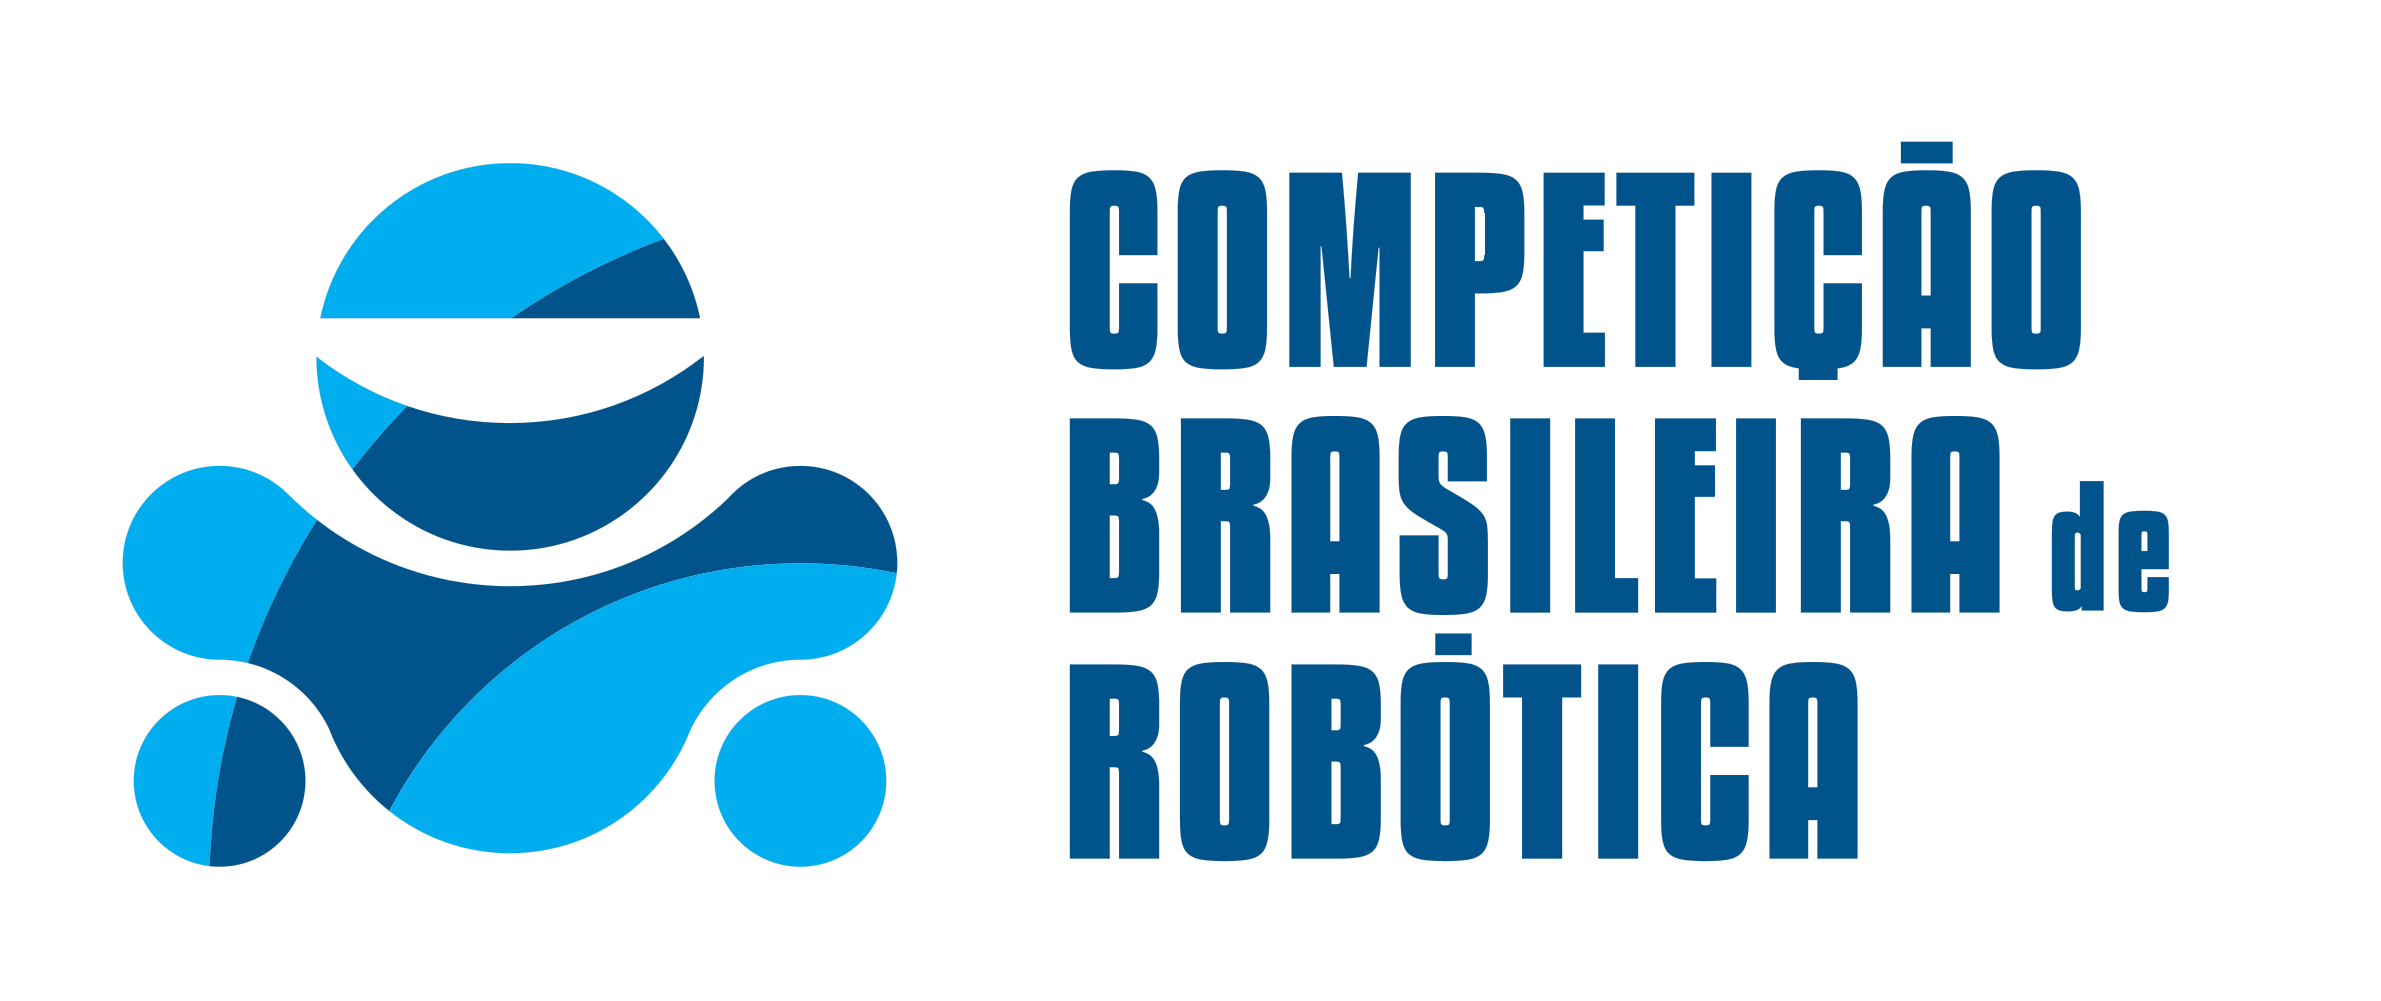 Google Competition 2018 Logo - Latin American and Brazilian Robotics Competition 2018 | November 6 ...